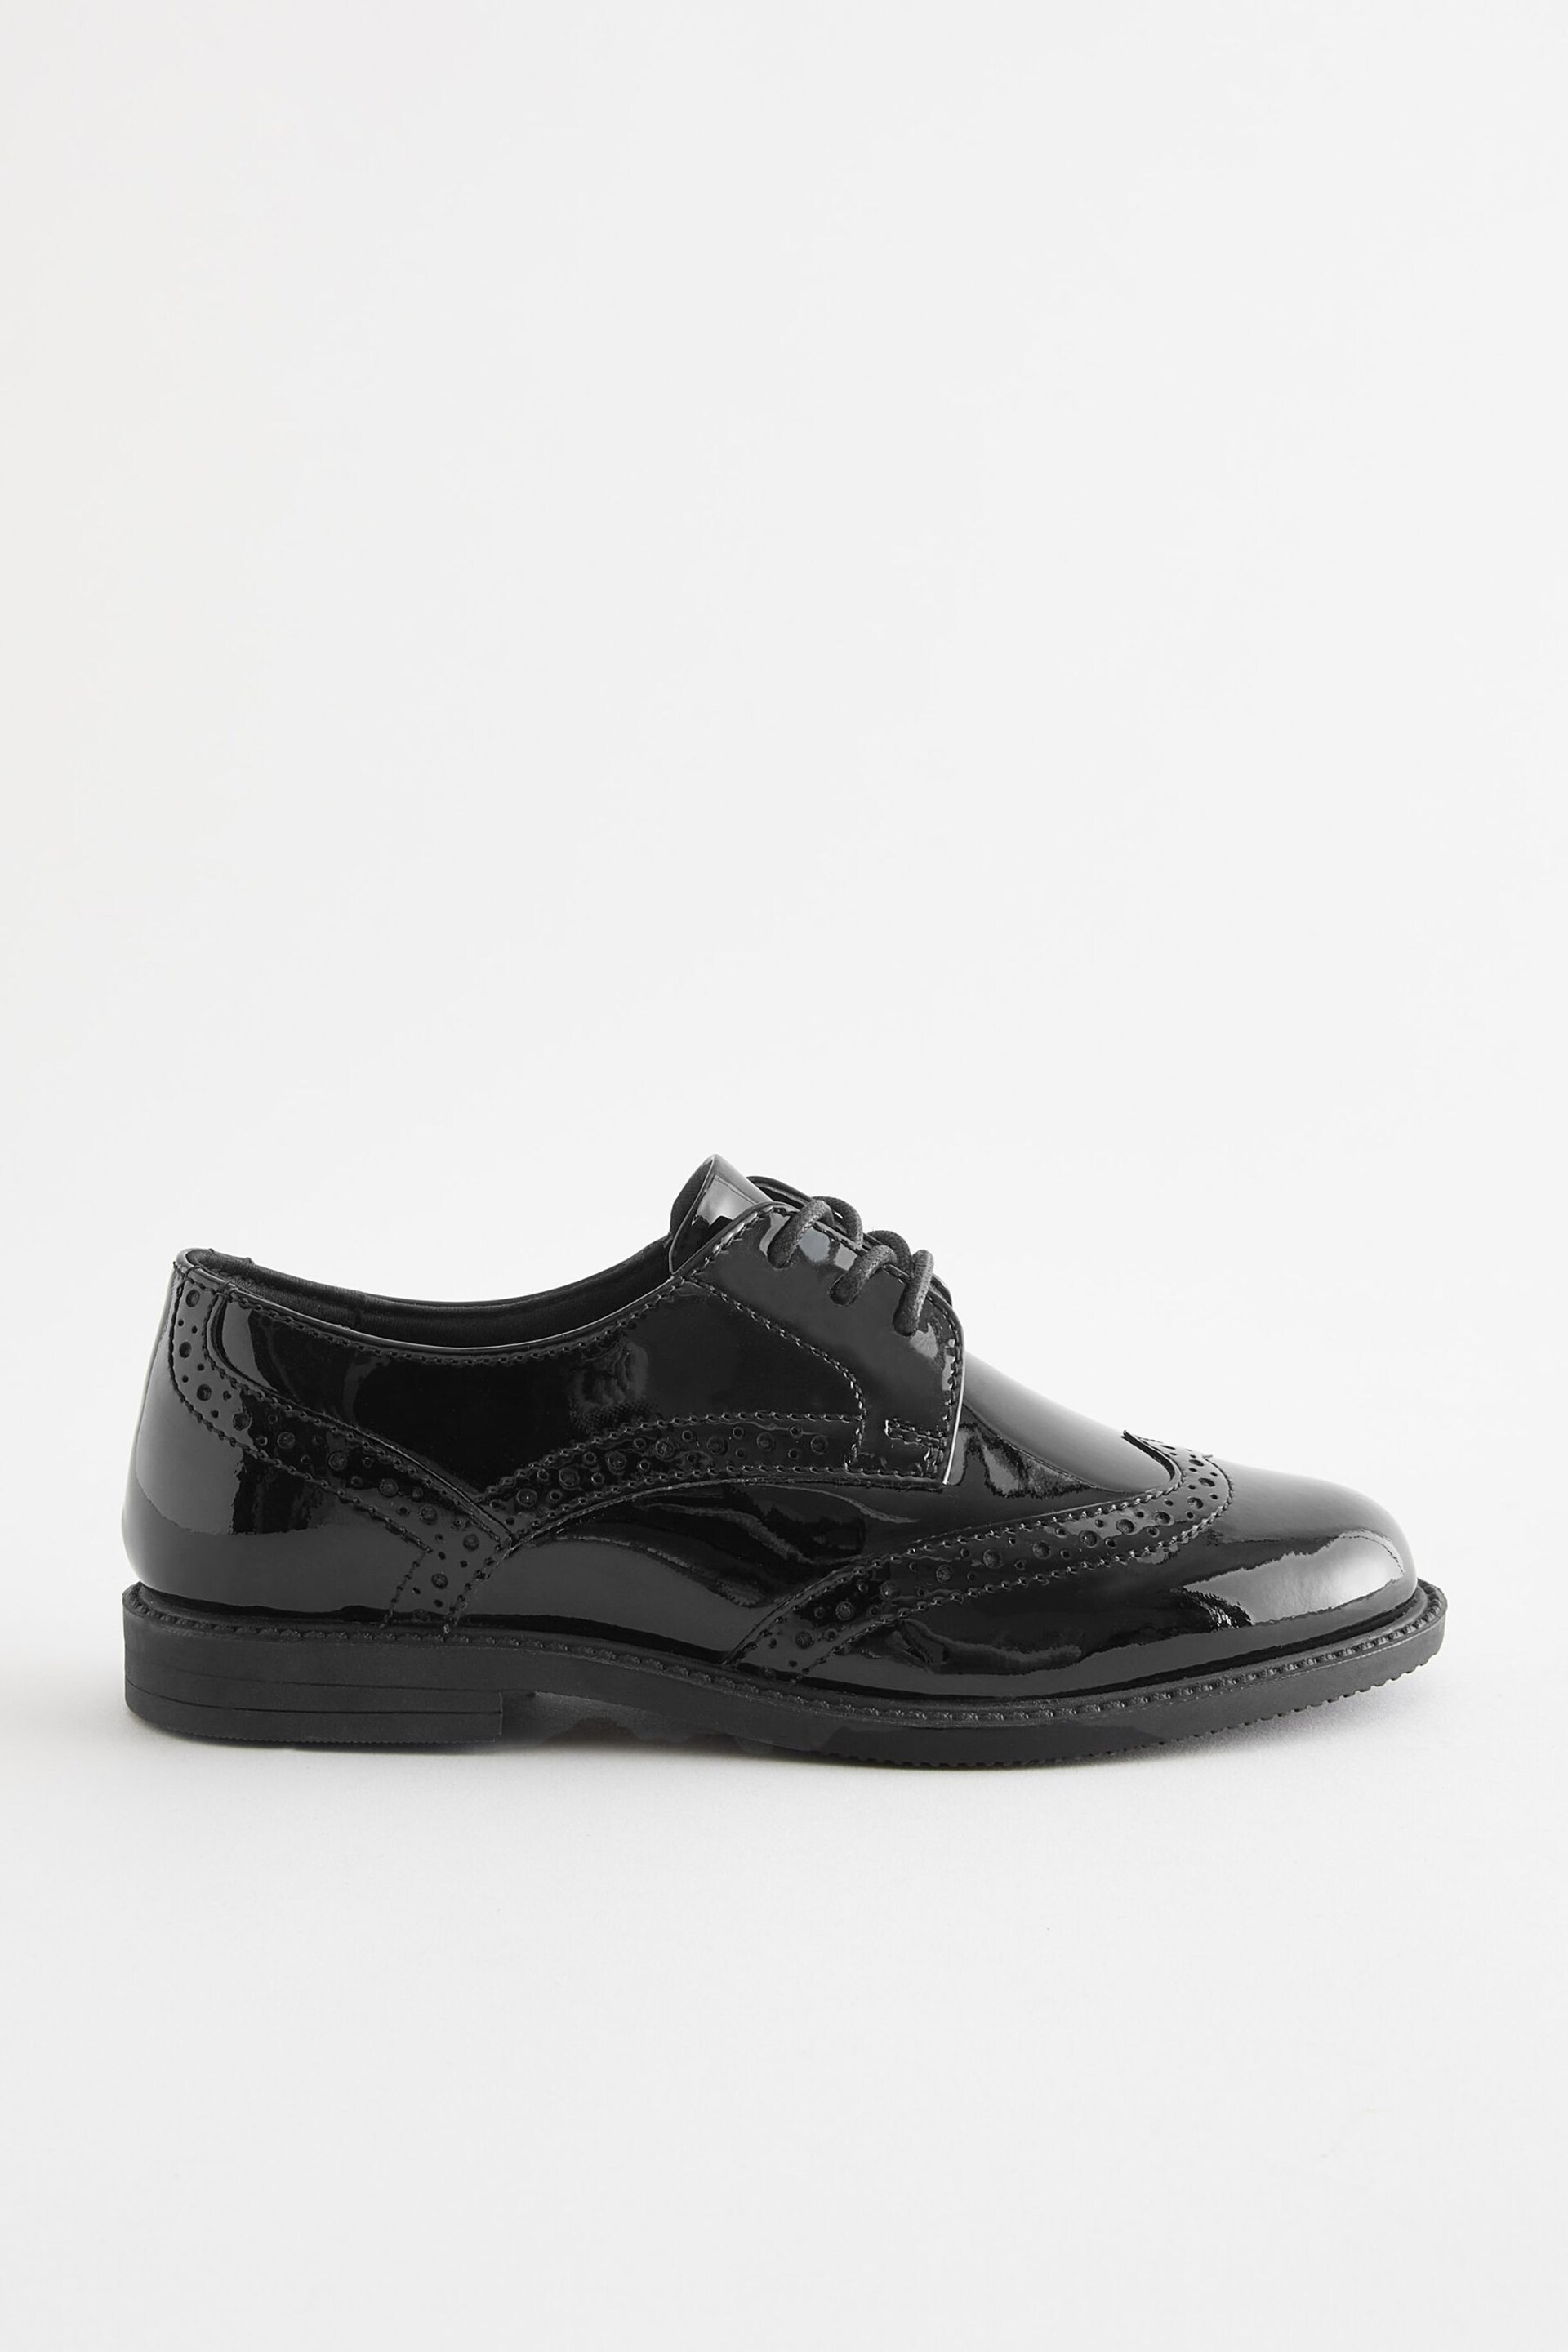 Black Patent School Lace-Up Brogue Detail Shoes - Image 2 of 6